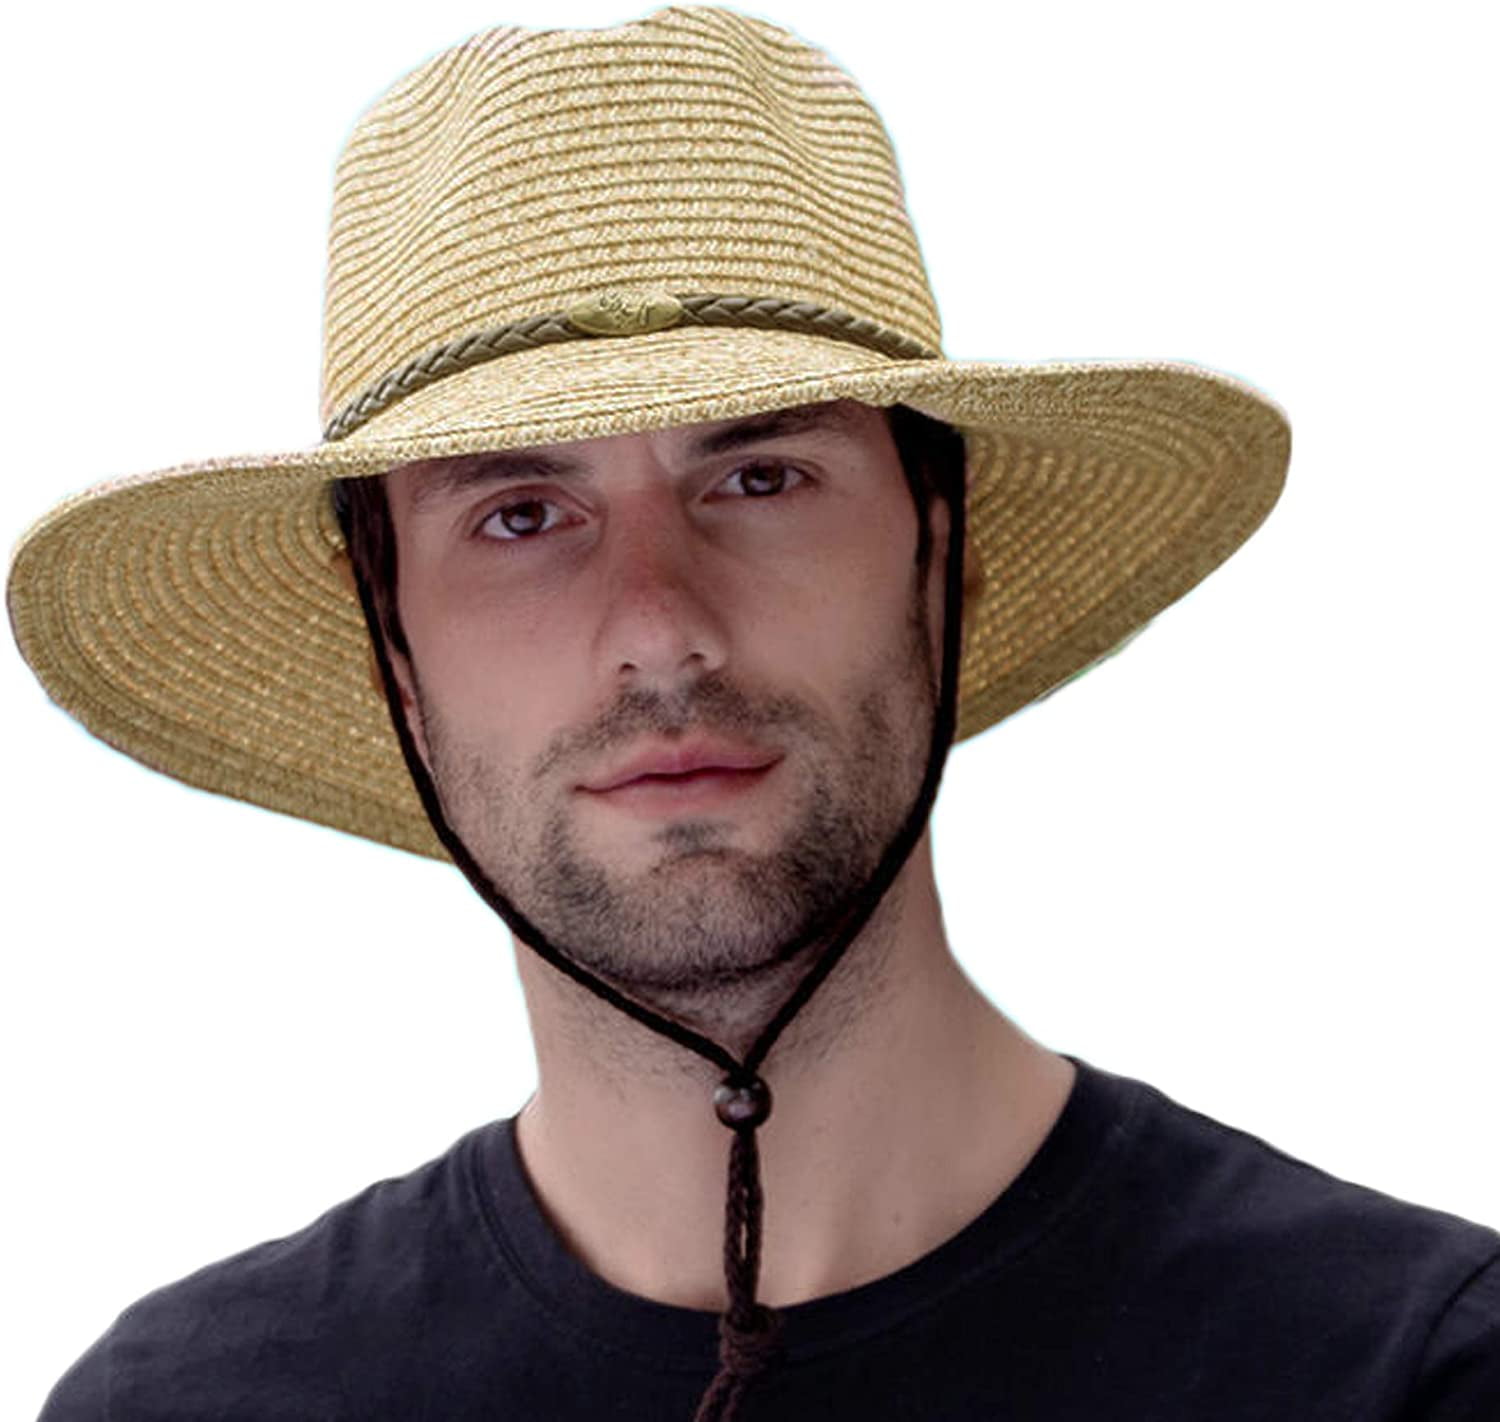 Panama Straw Hats Summer Beach Cowboy Hat Cowgirl Hat Sun Protection Beach Hat